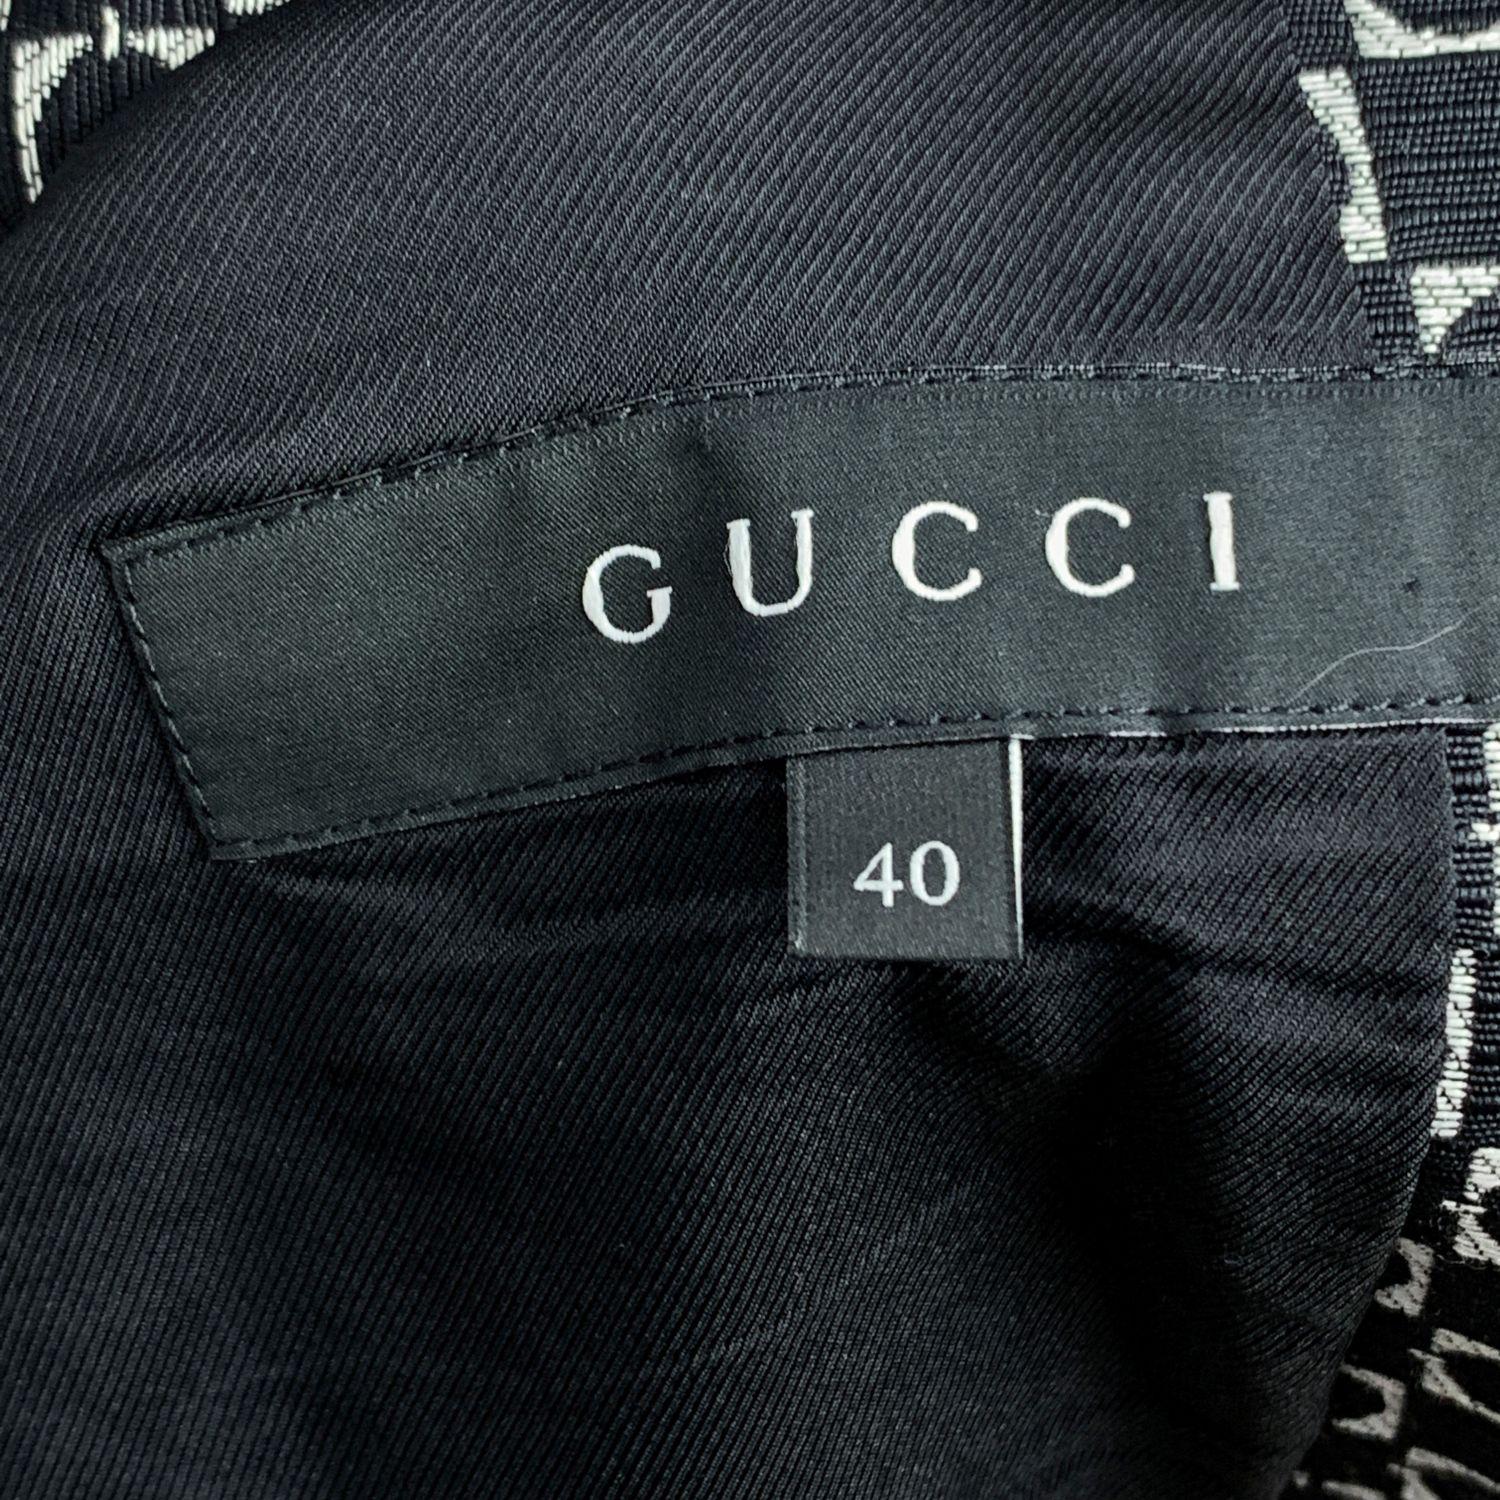 Gucci Black Patterned Cotton and Silk Blazer Jacket Size 40 IT 2